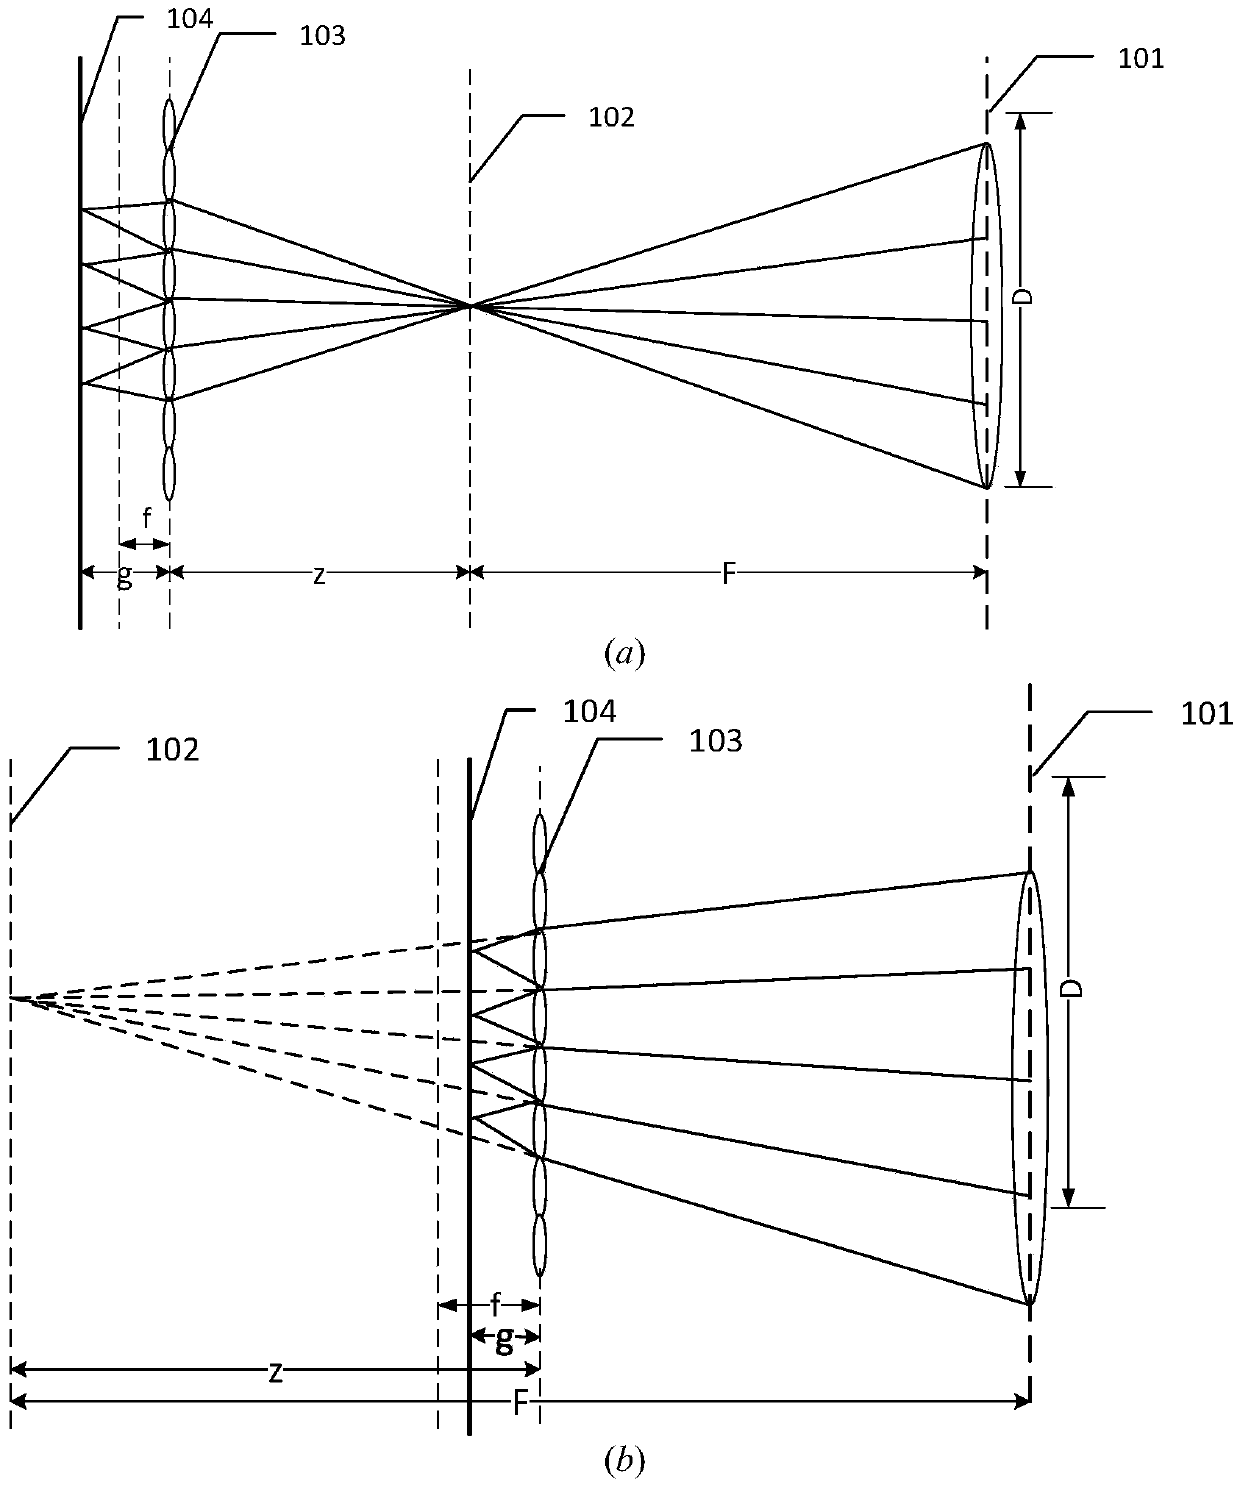 Light field camera external parameter calibration device and method